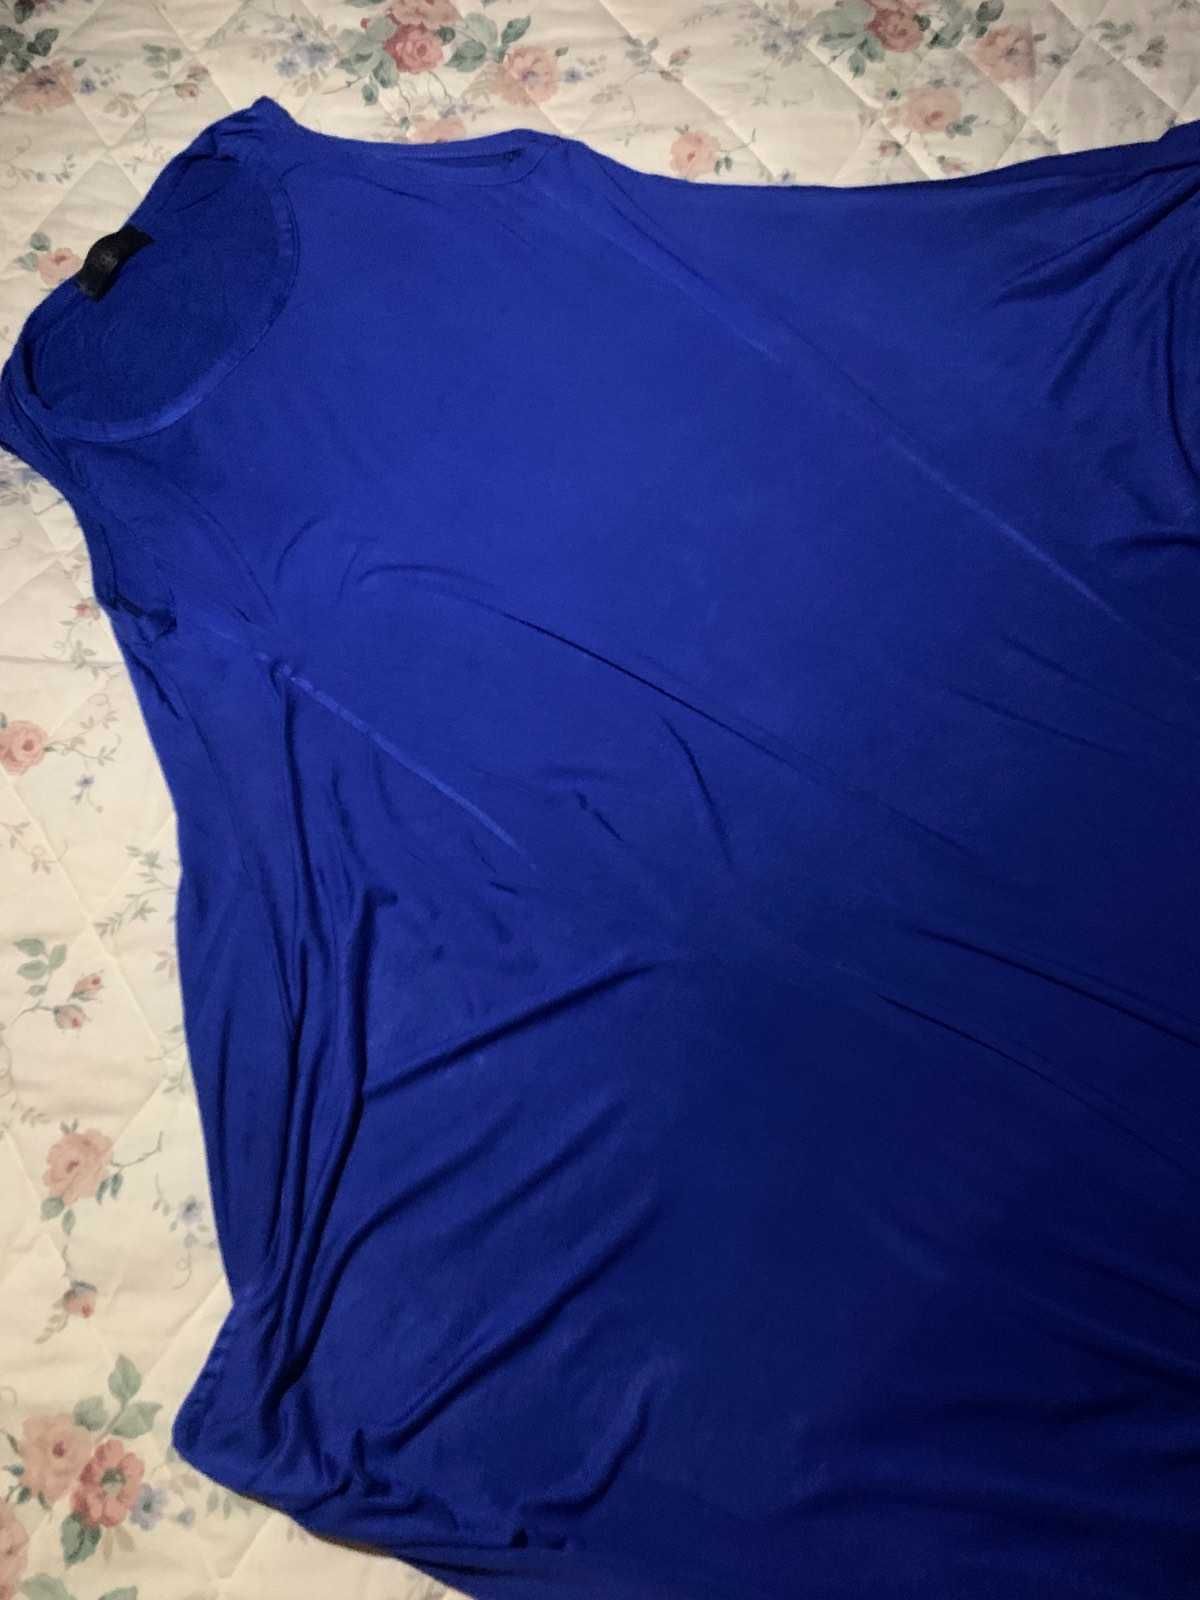 Платье ярко-синее в стиле Бохо.